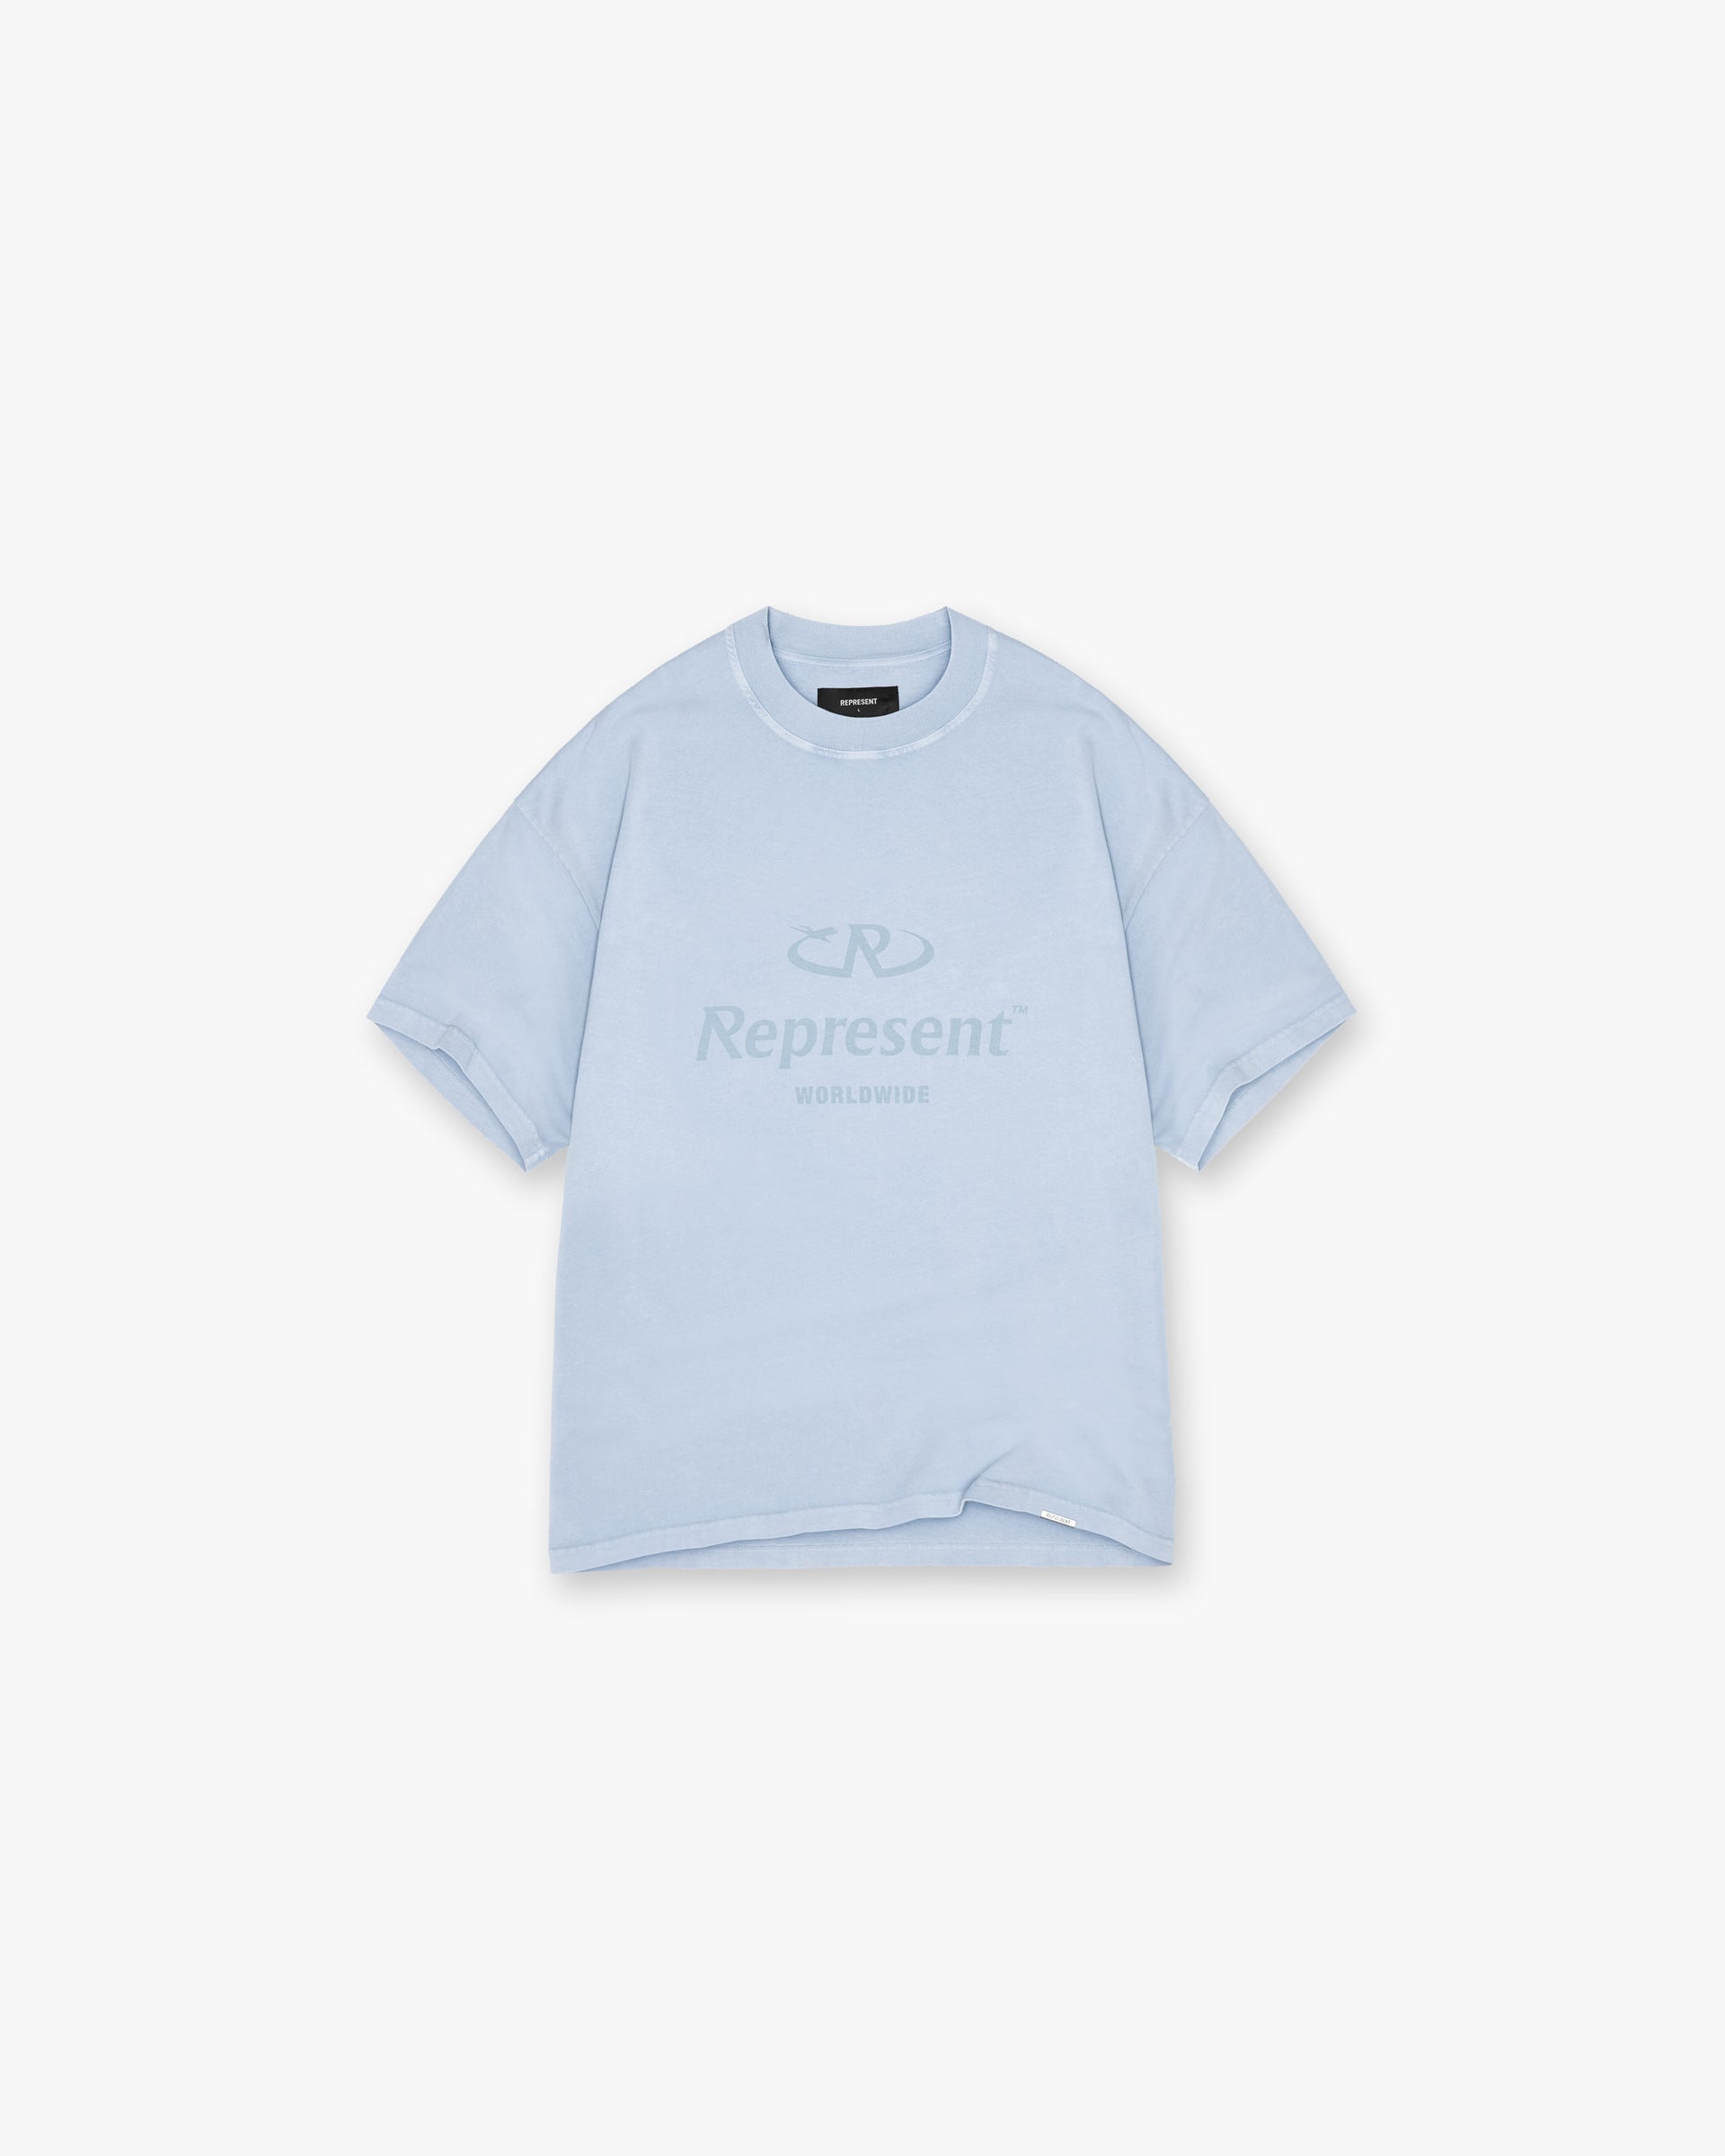 Worldwide T-Shirt | Powder Blue T-Shirts SC23 | Represent Clo